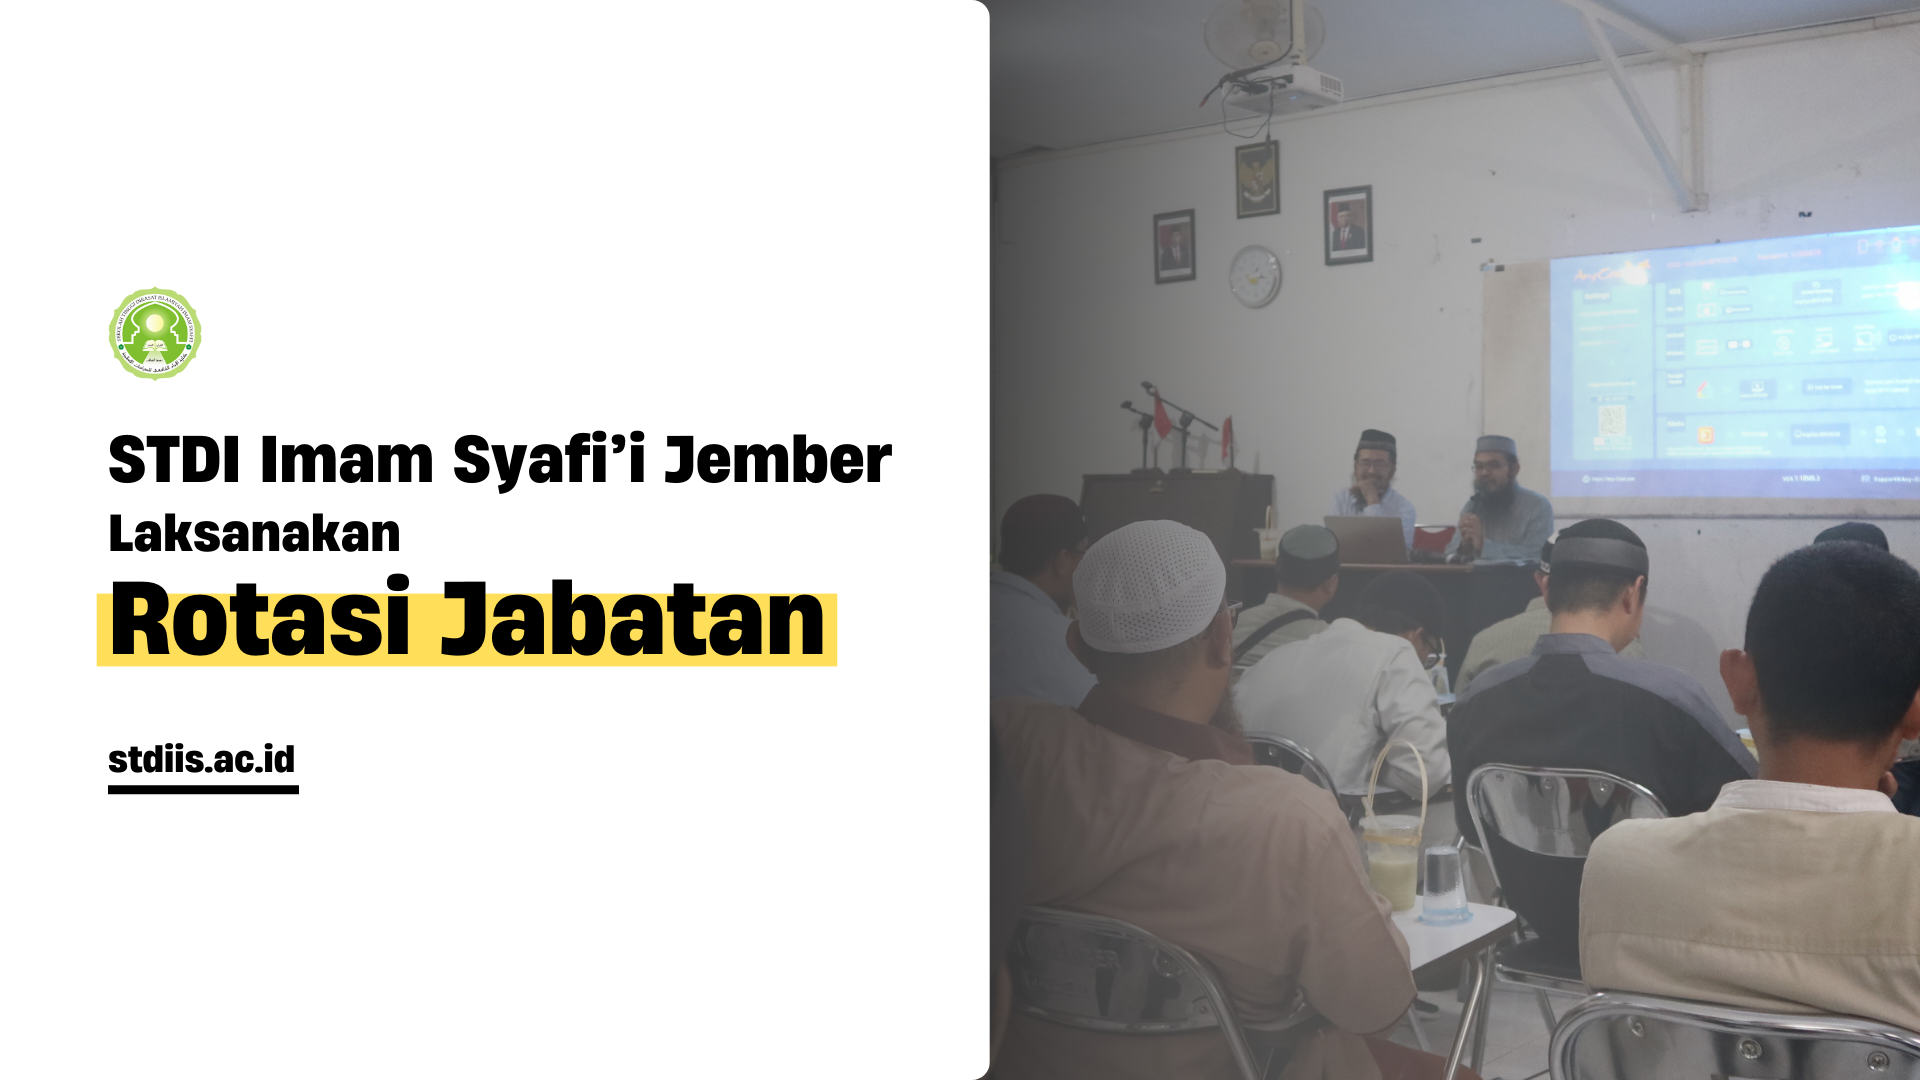 You are currently viewing STDI Imam Syafi’i Jember Lakukan Rotasi Jabatan